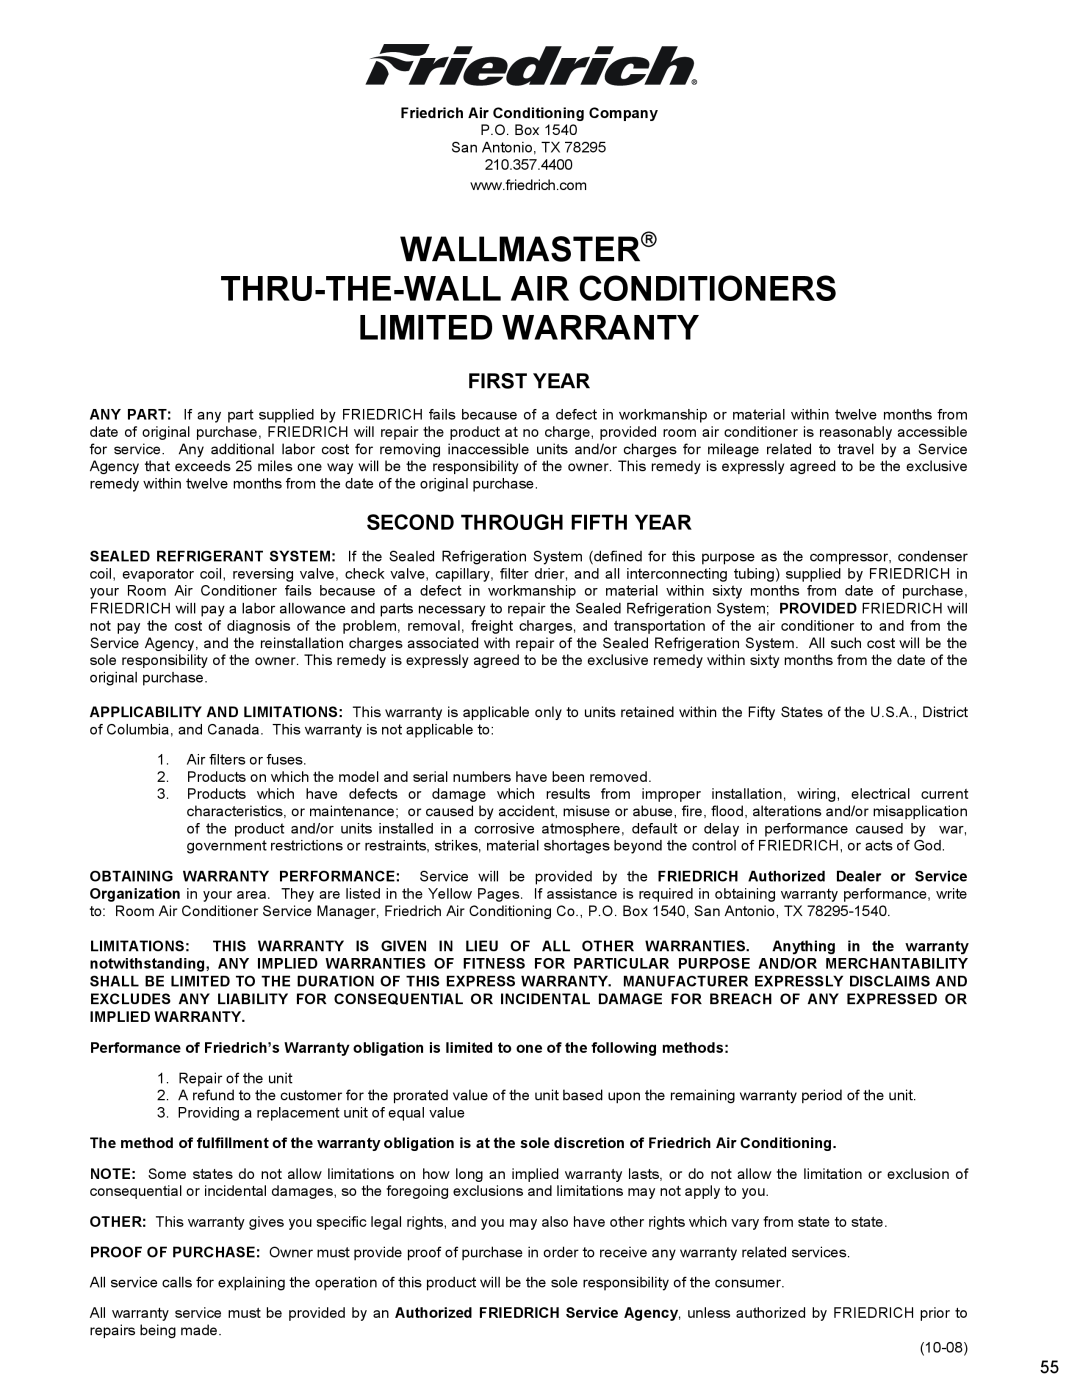 Friedrich 2009, 2008 First Year, Second Through Fifth Year, Wallmaster→ Thru-The-Wallair Conditioners, Limited Warranty 